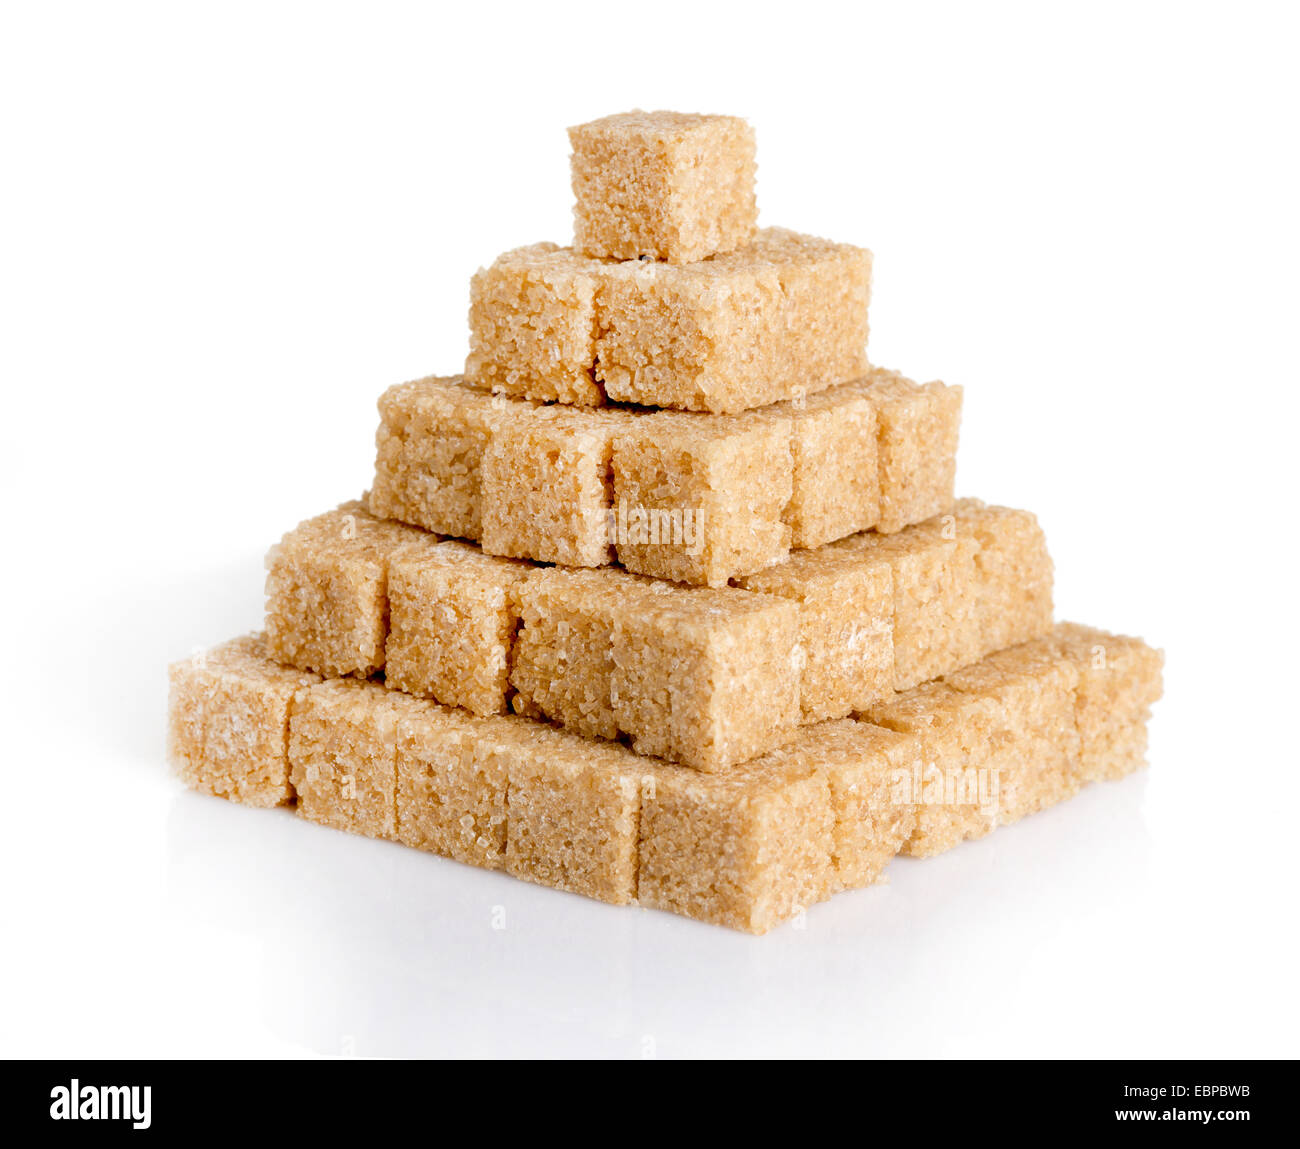 Pyramid of cane sugar cubes isolated on white background Stock Photo